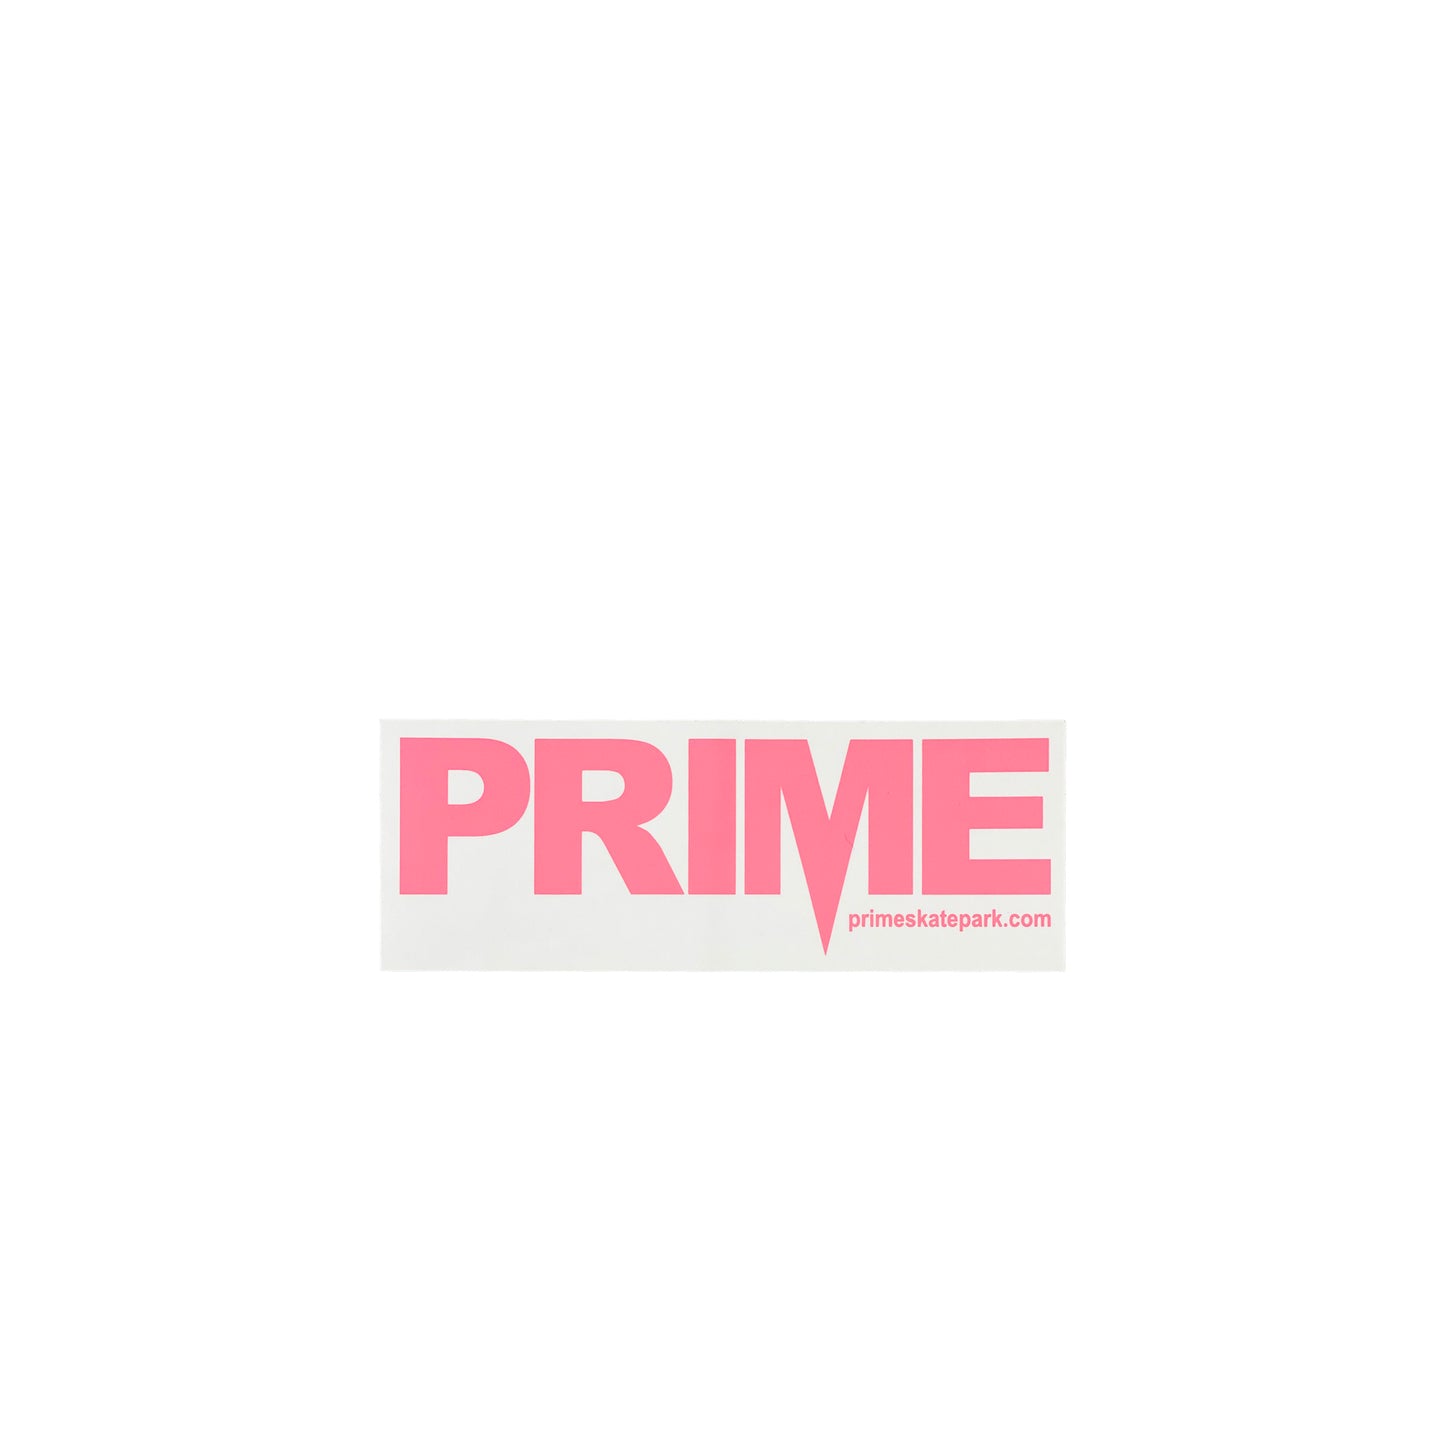 Prime Delux OG SP Sticker M - Pink / White - Prime Delux Store